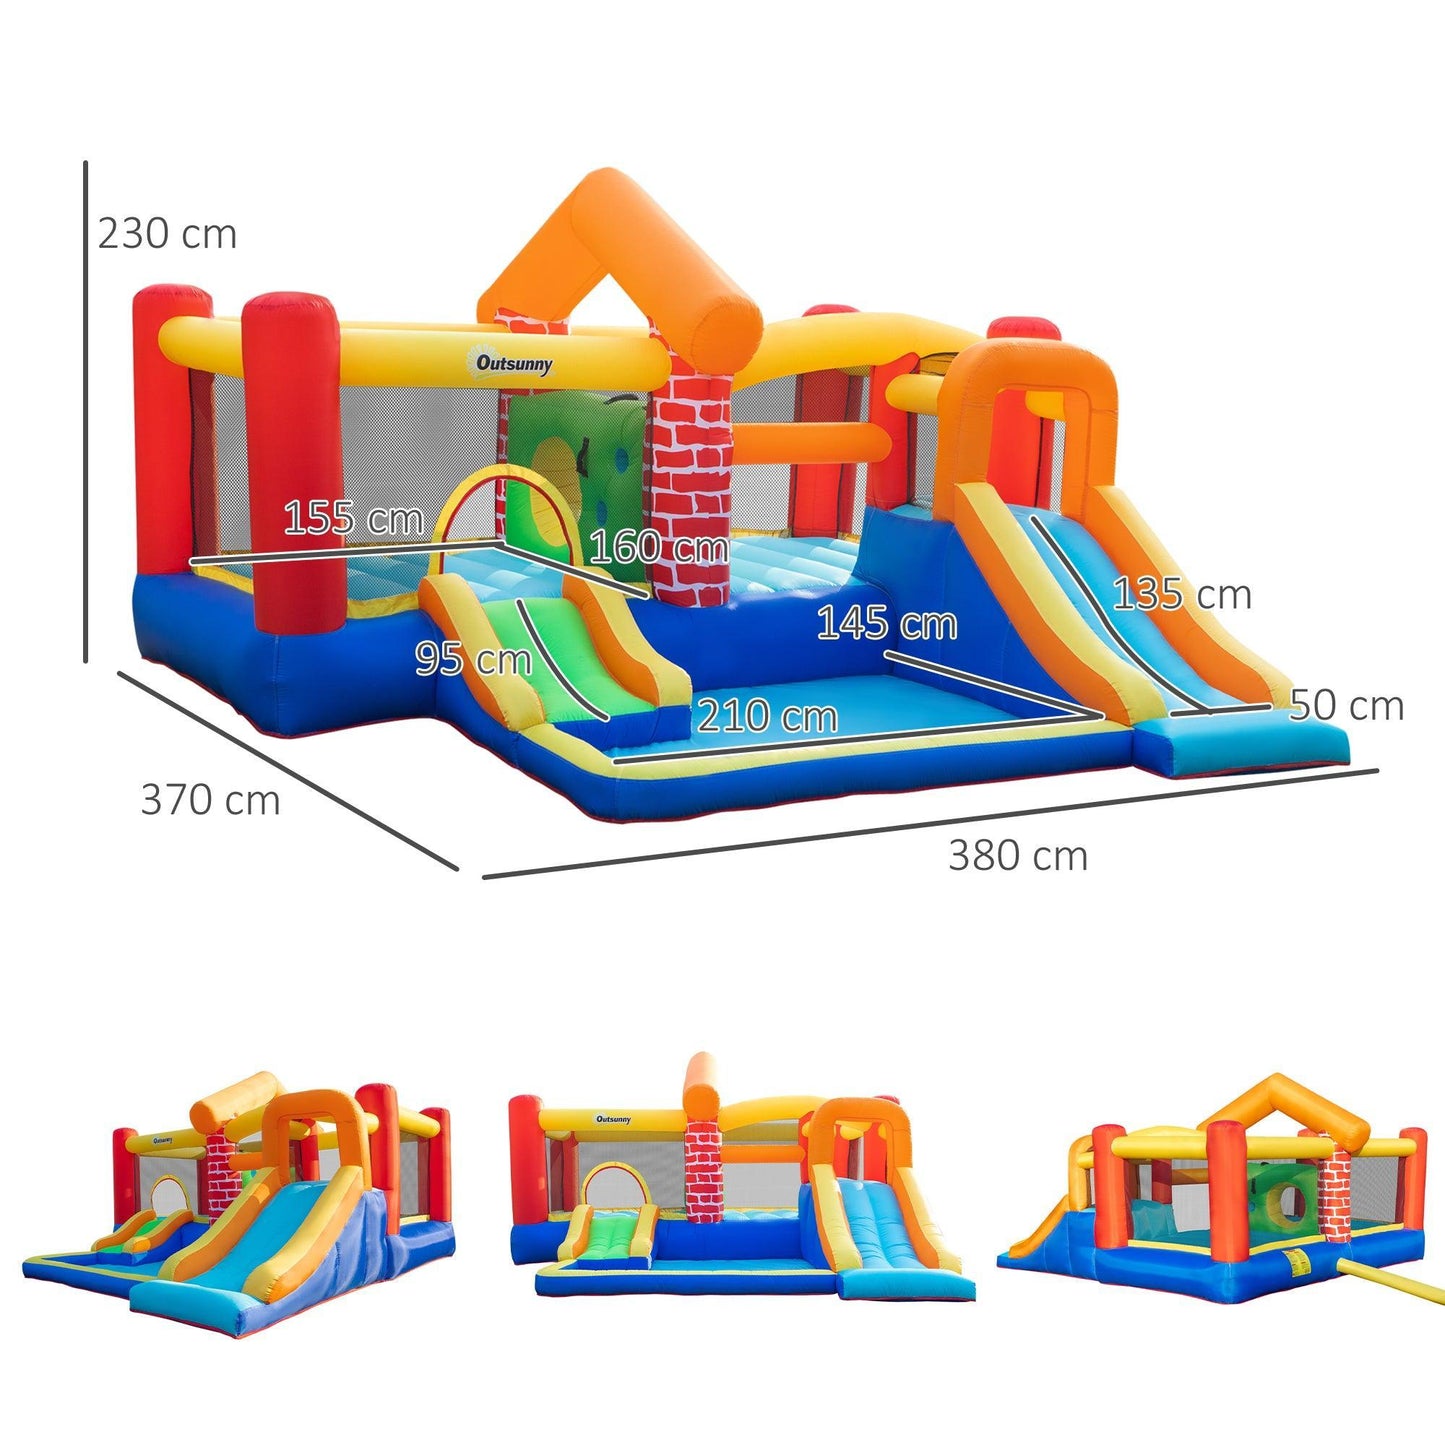 Outsunny Kids Bounce Castle - Double Slides, Trampoline, Climbing Wall - ALL4U RETAILER LTD